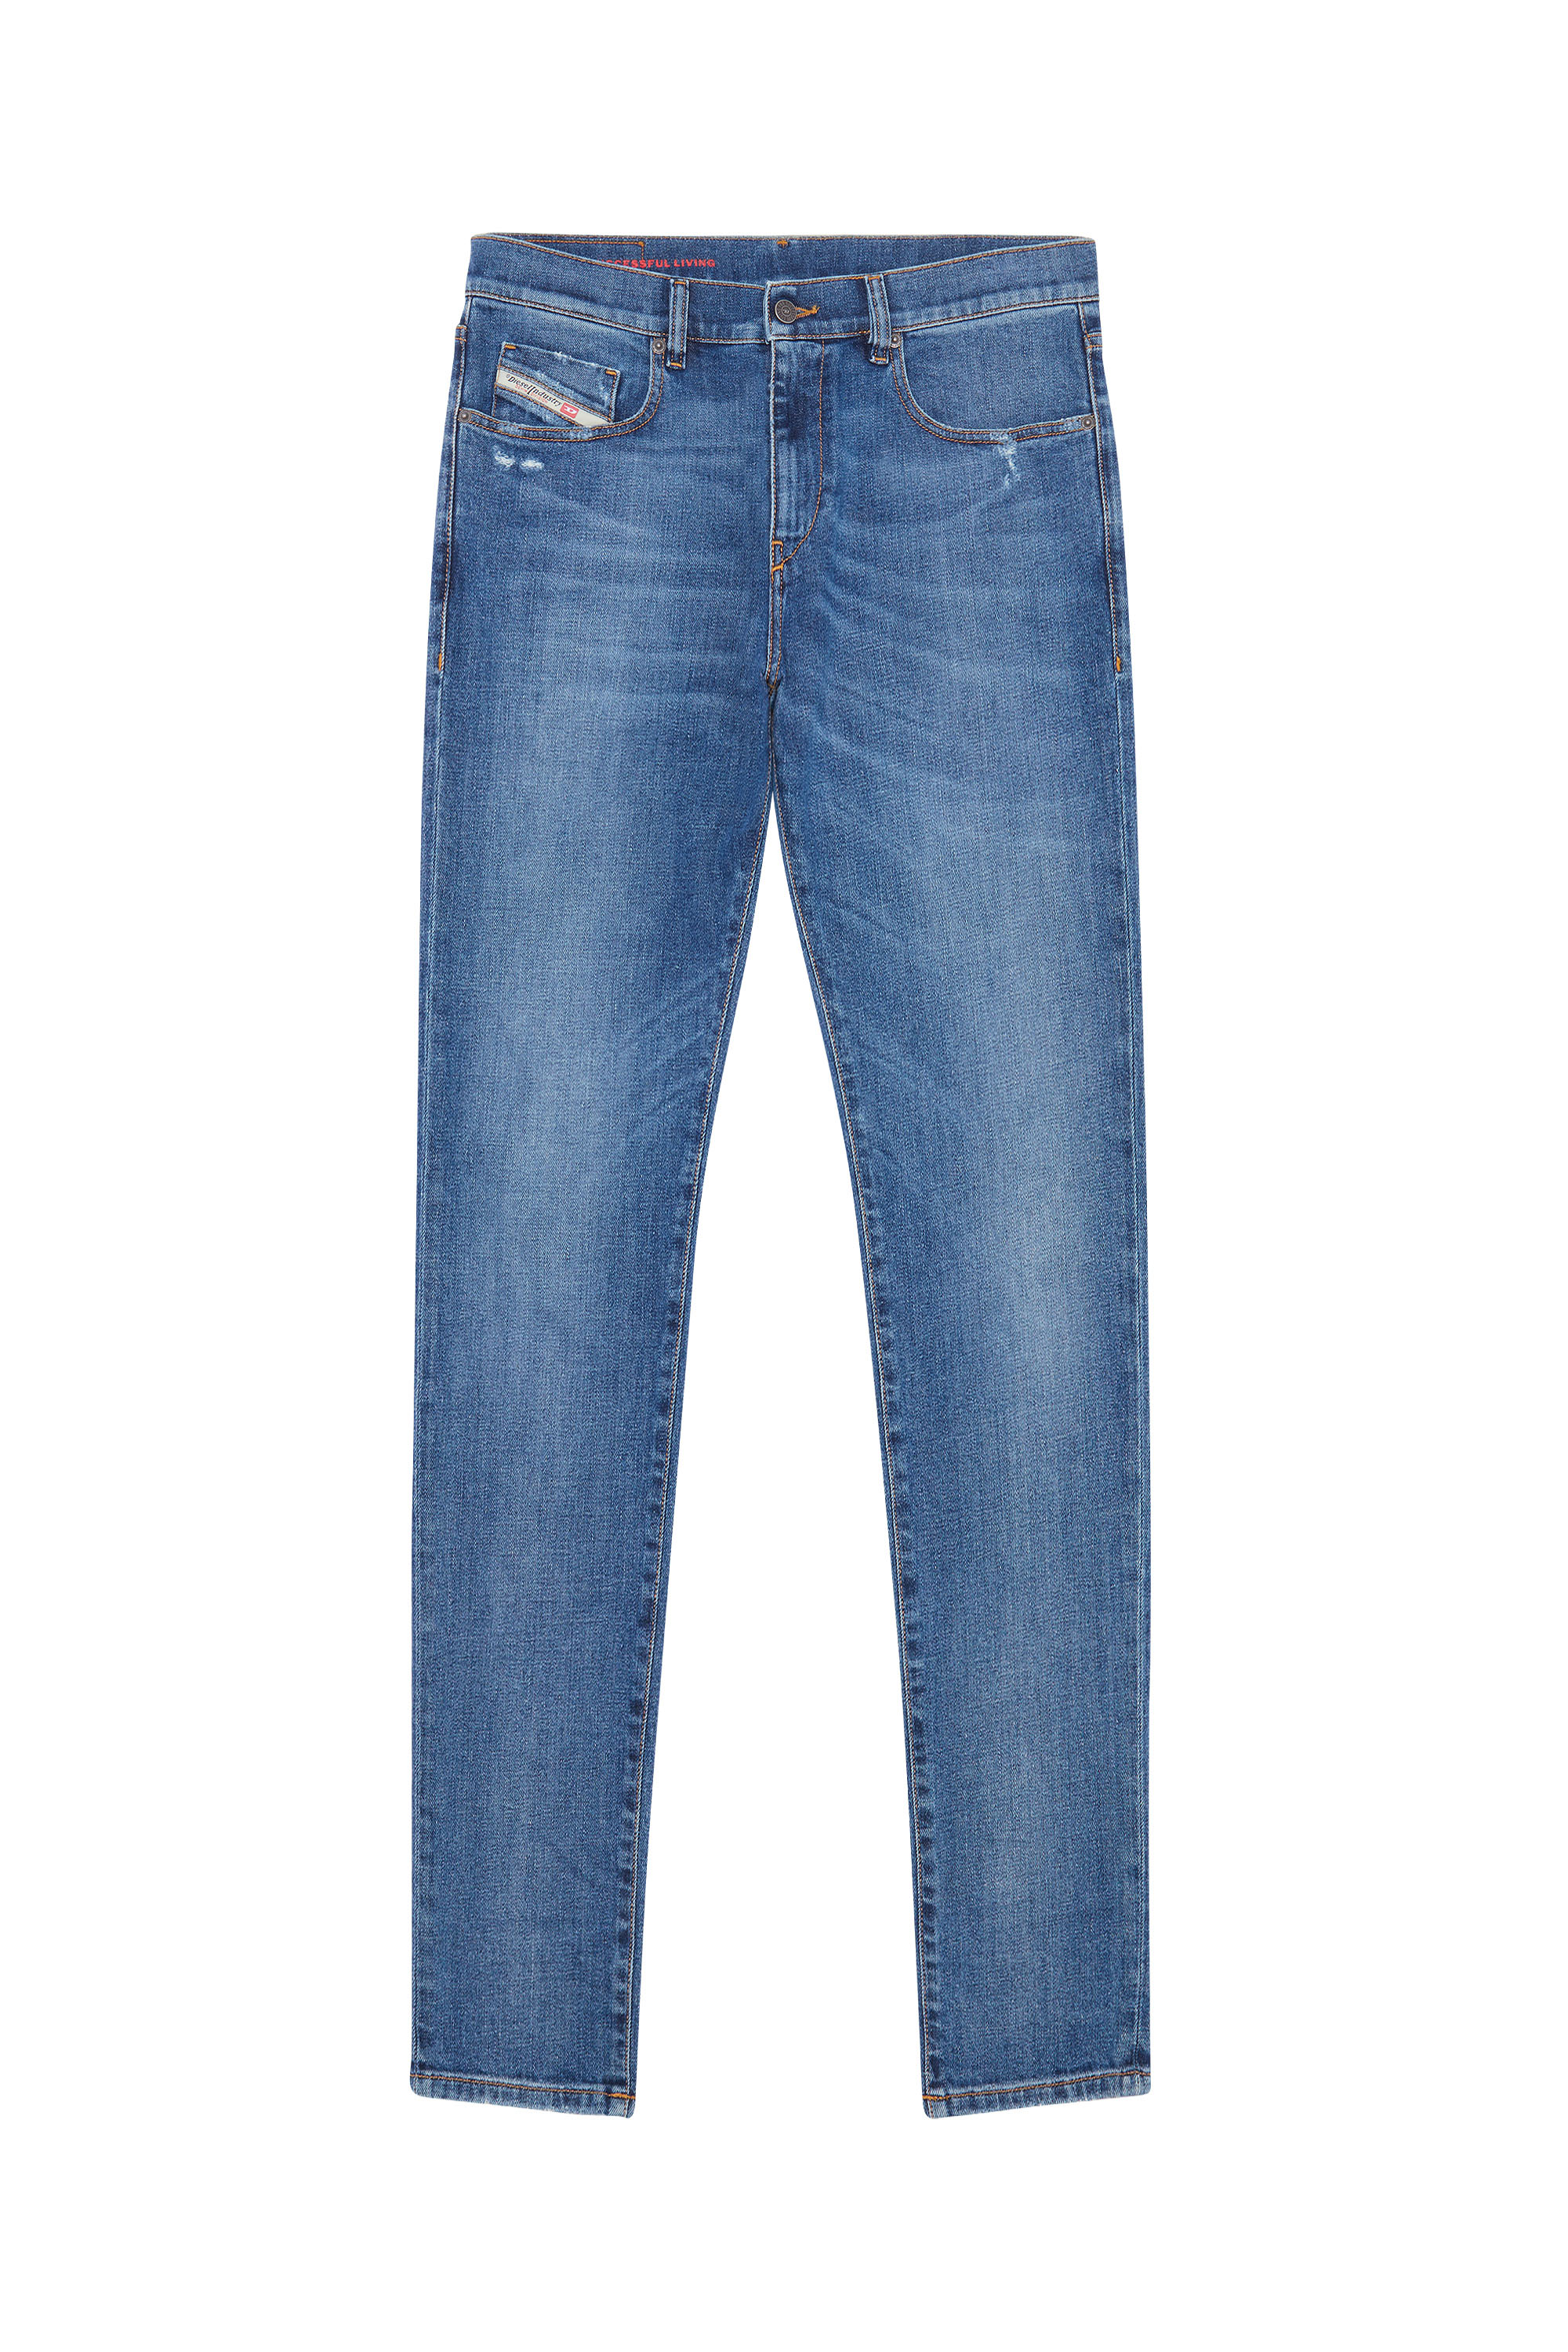 2019 D-STRUKT 09E44 Slim Jeans, Mittelblau - Jeans